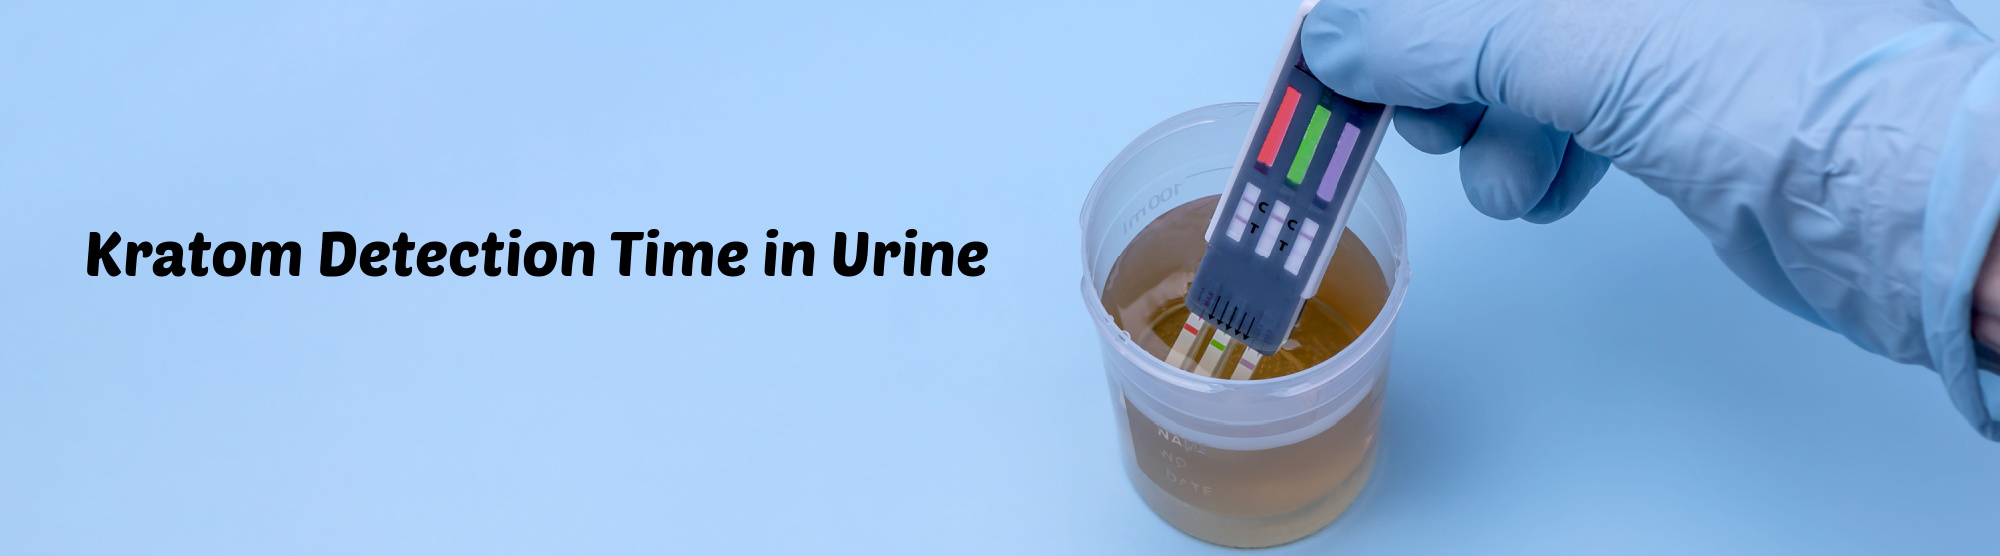 image of kratom detection time in urine